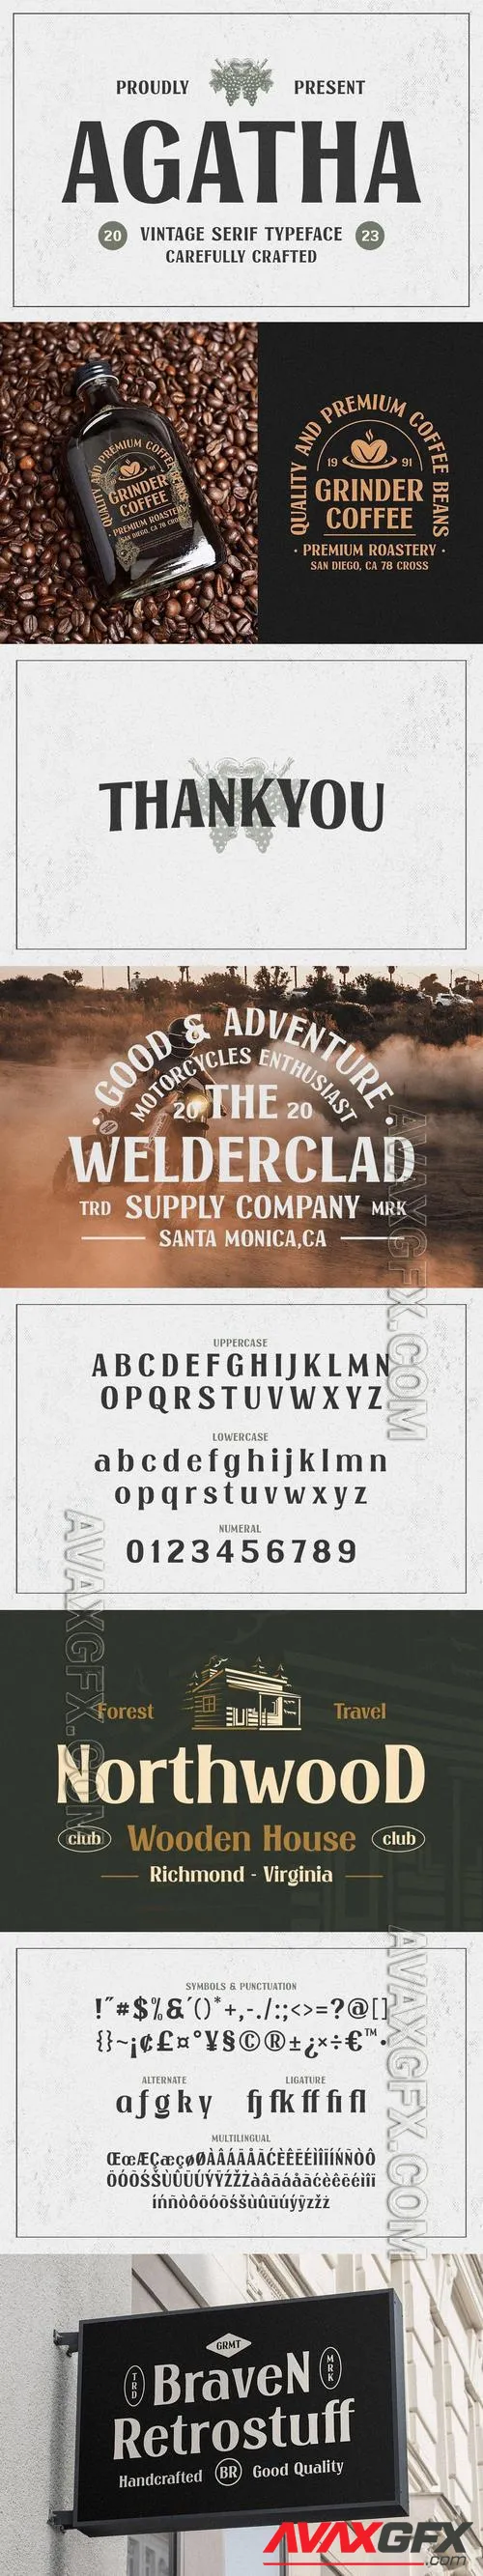 Agatha - Vintage Serif Typeface